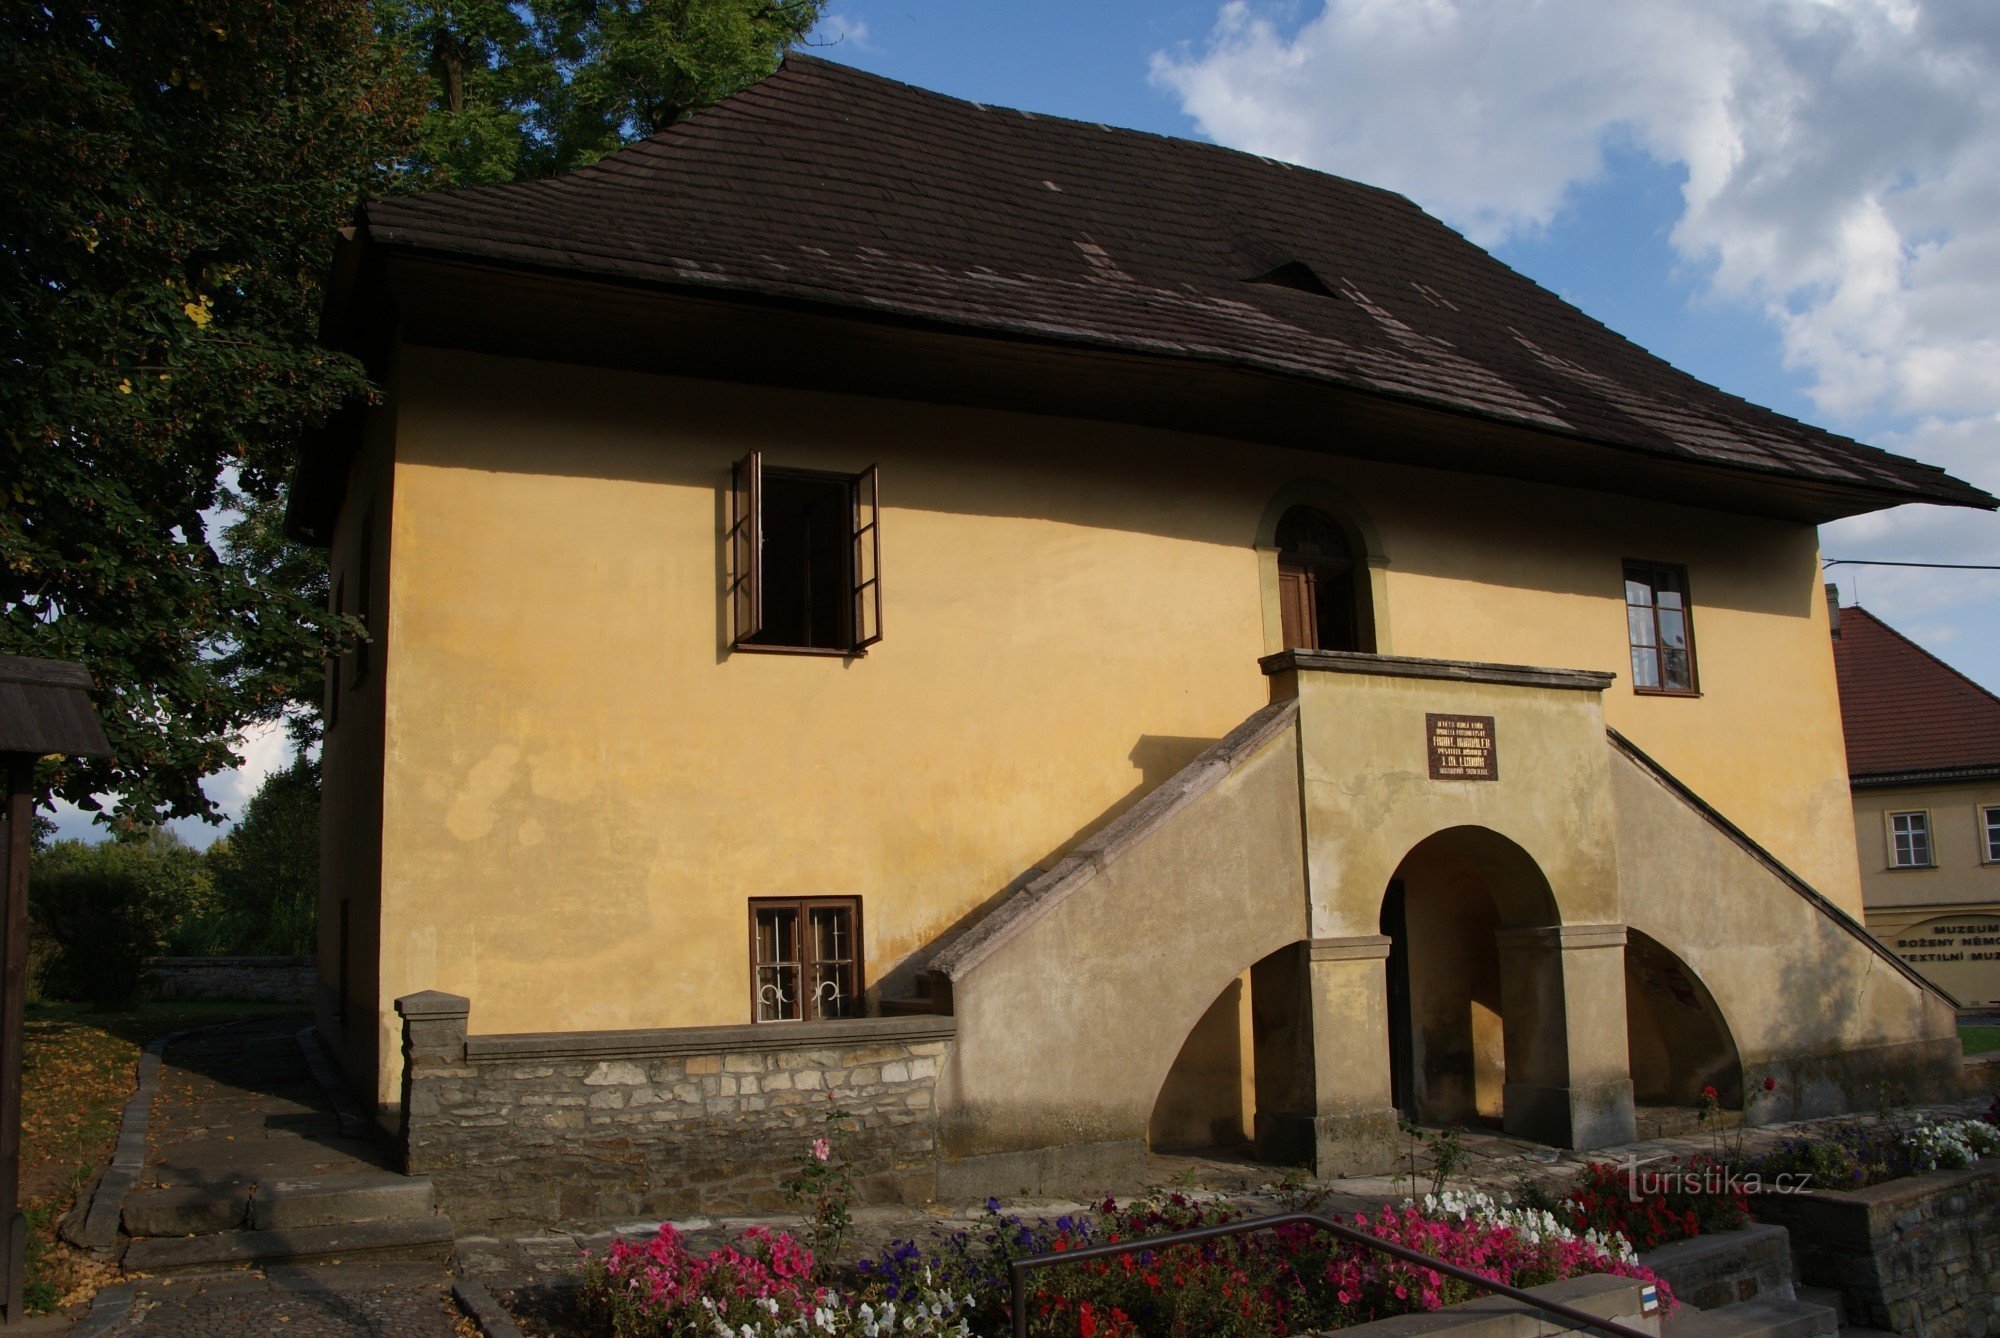 Česká Skalice - nhà xứ "nhỏ" baroque